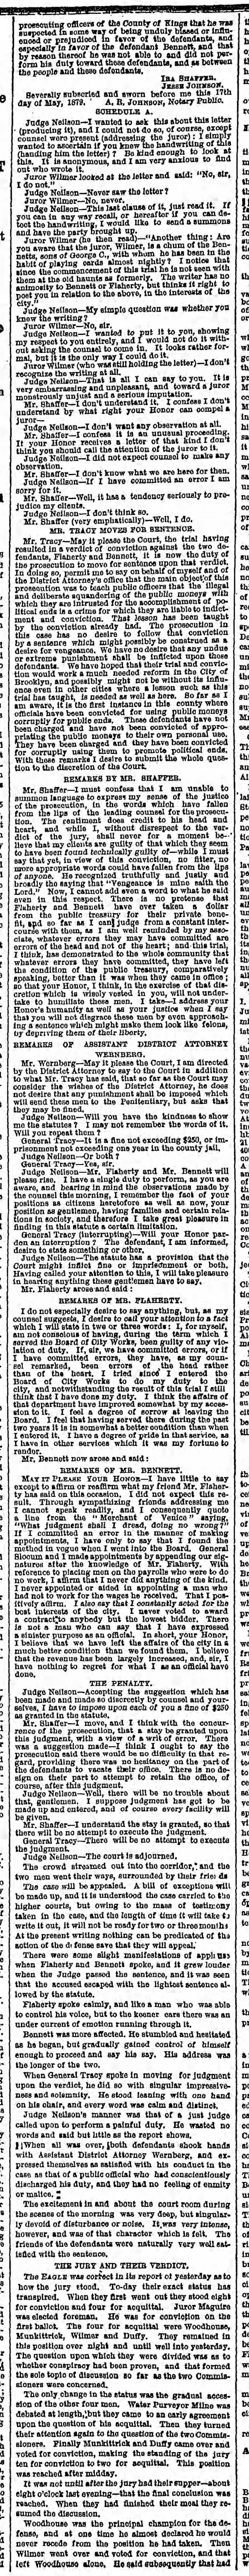 Saturday, May 17, 1879 - Page 4 - 2 of 4